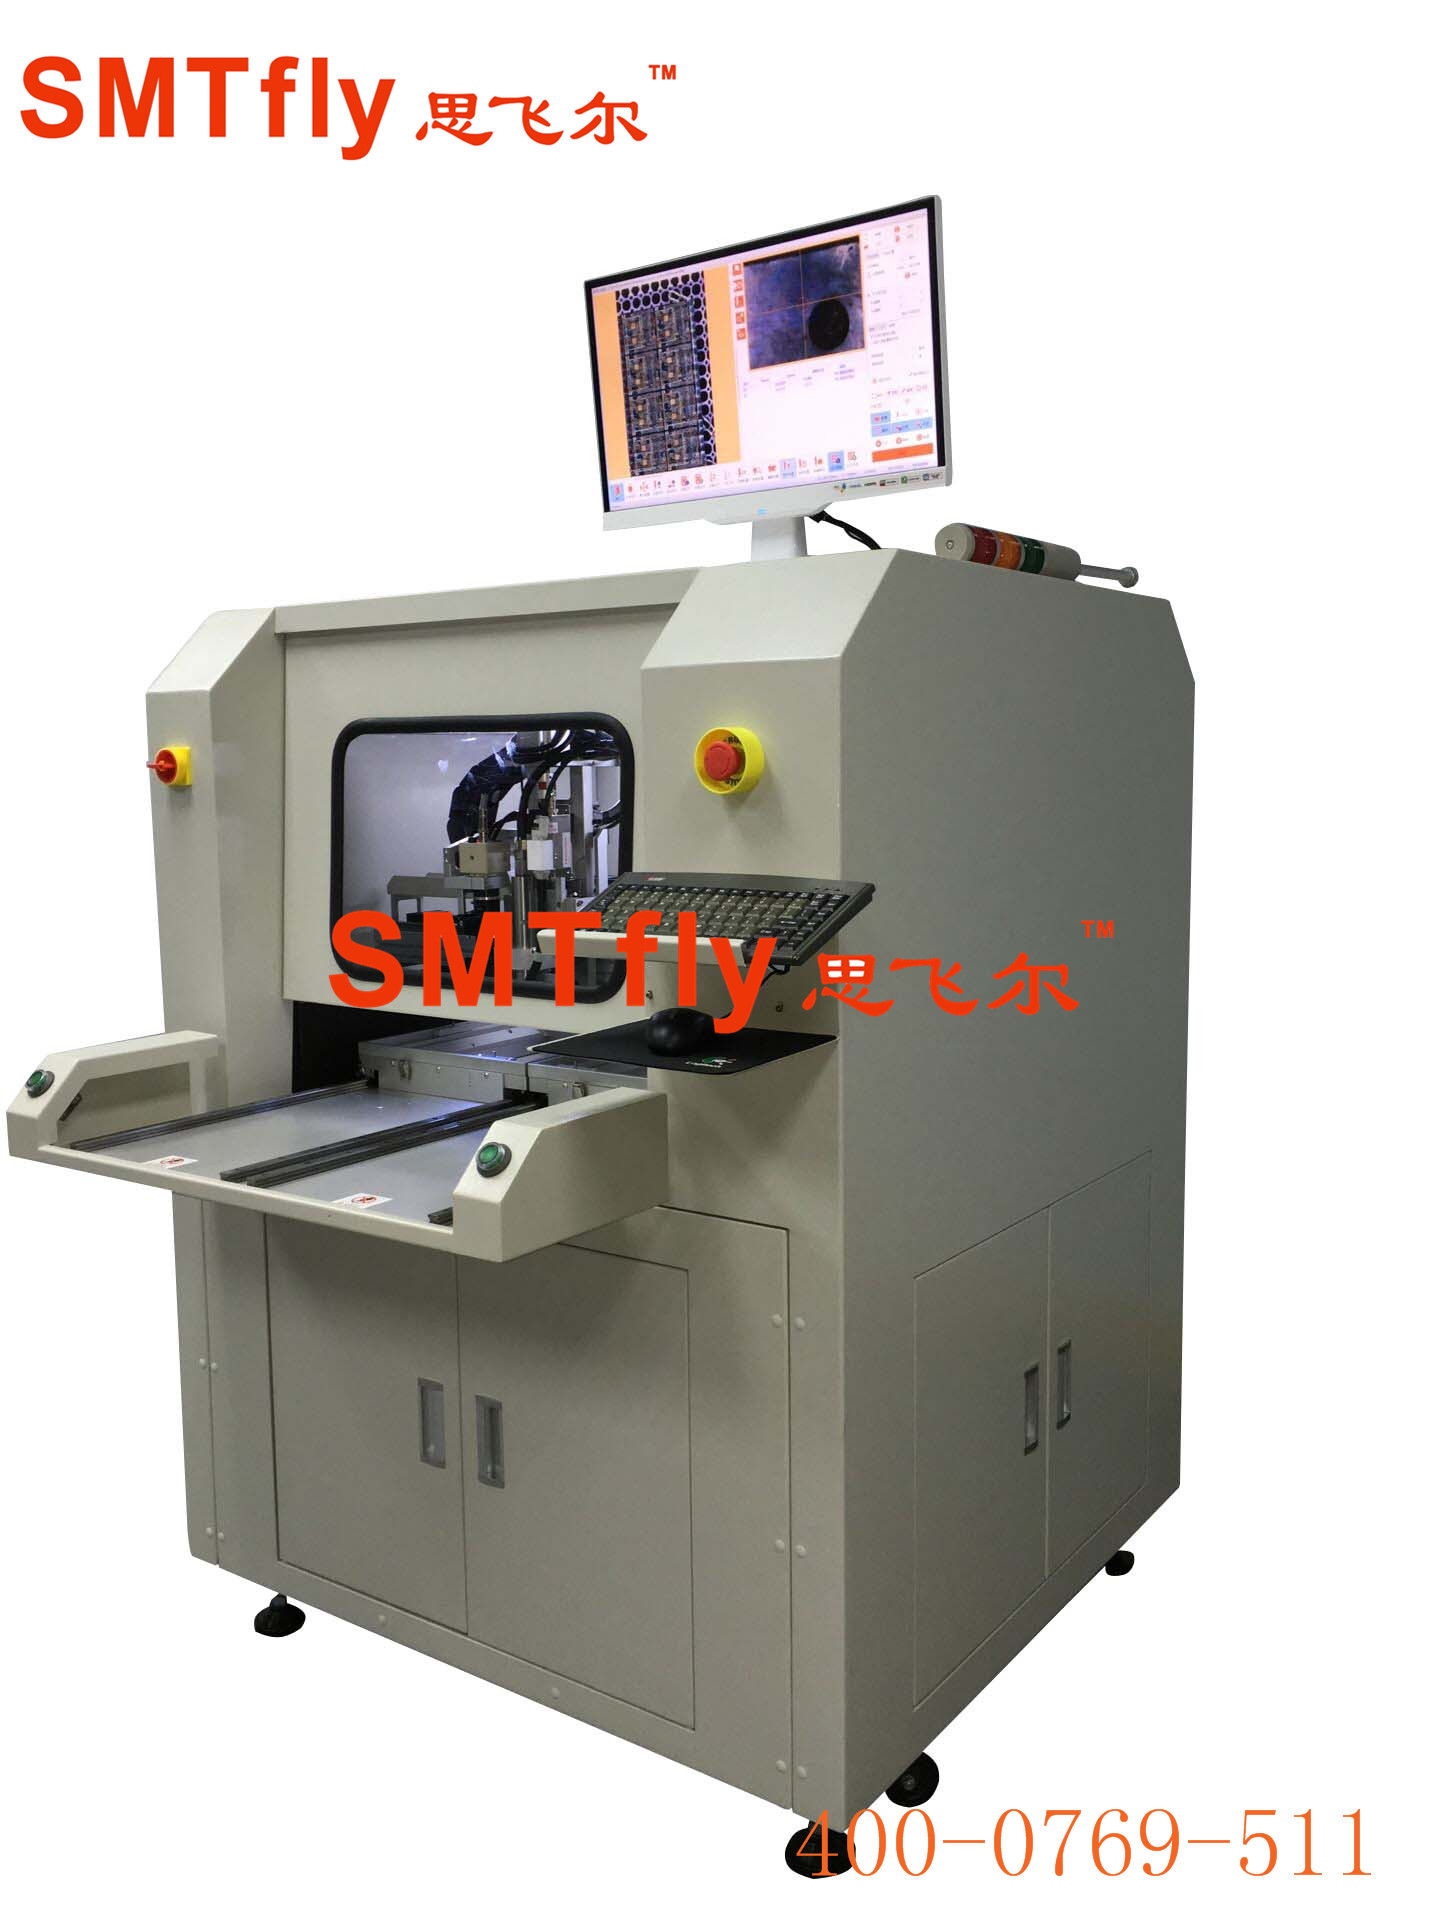 PCB Routing Equipment,PCB Depaneling,SMTfly-F01-S